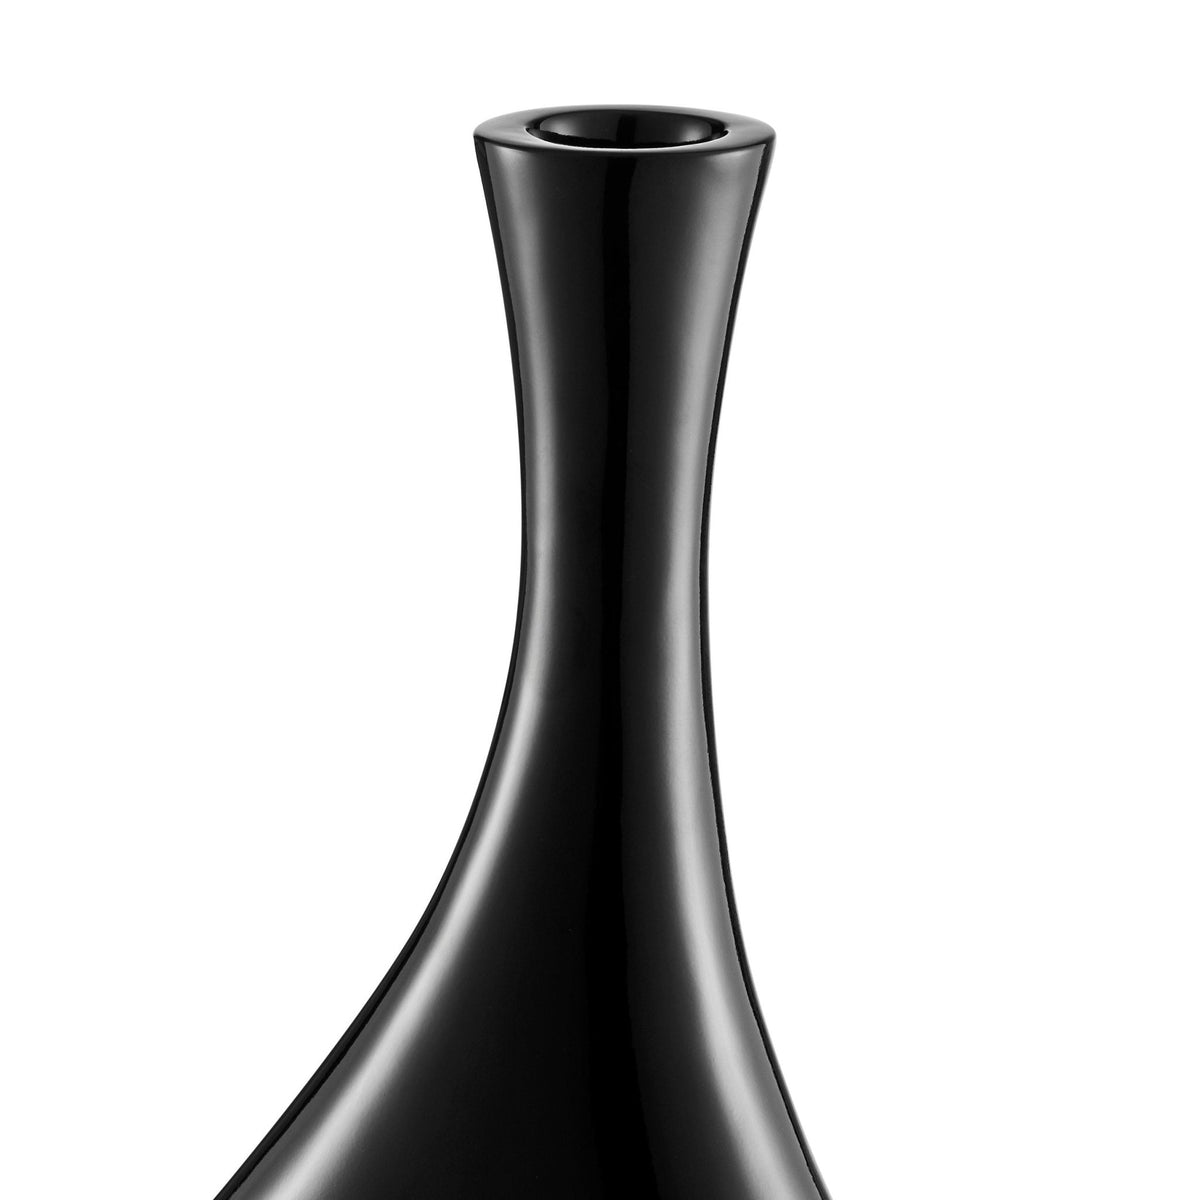 Trombone Vase in Black / Small / Modern Decor